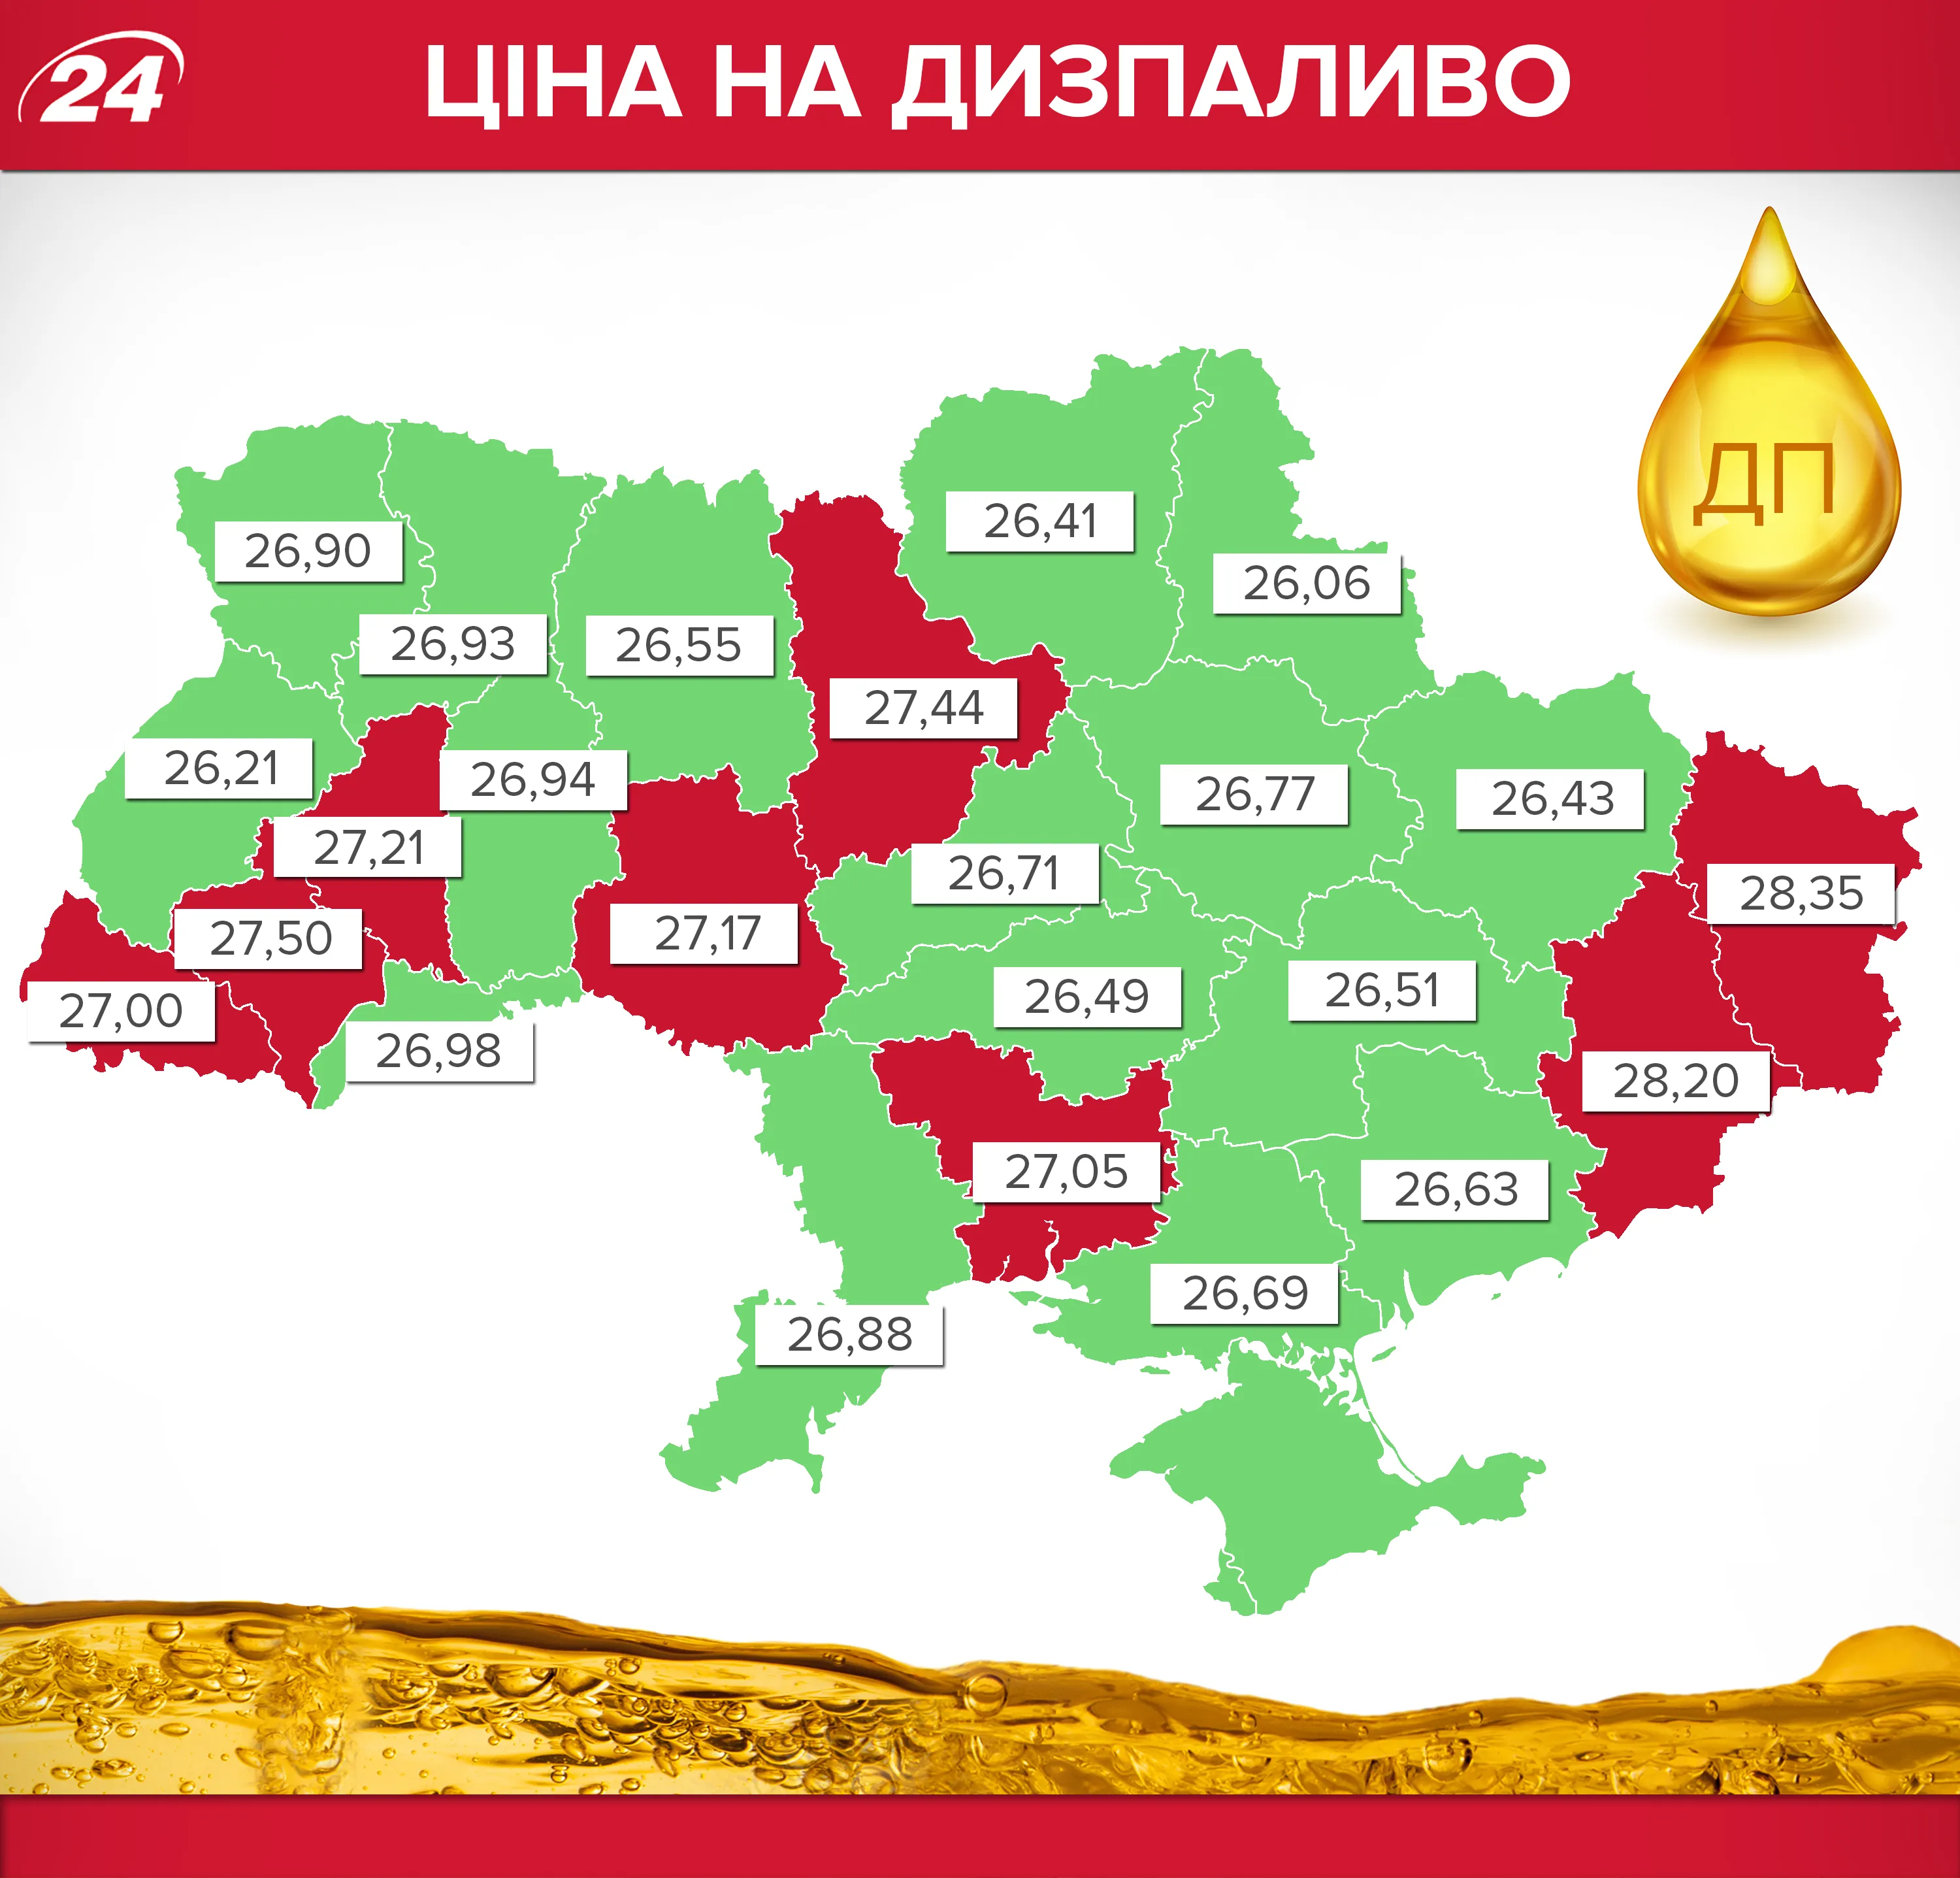 Ціни на дизельне пальне, україна